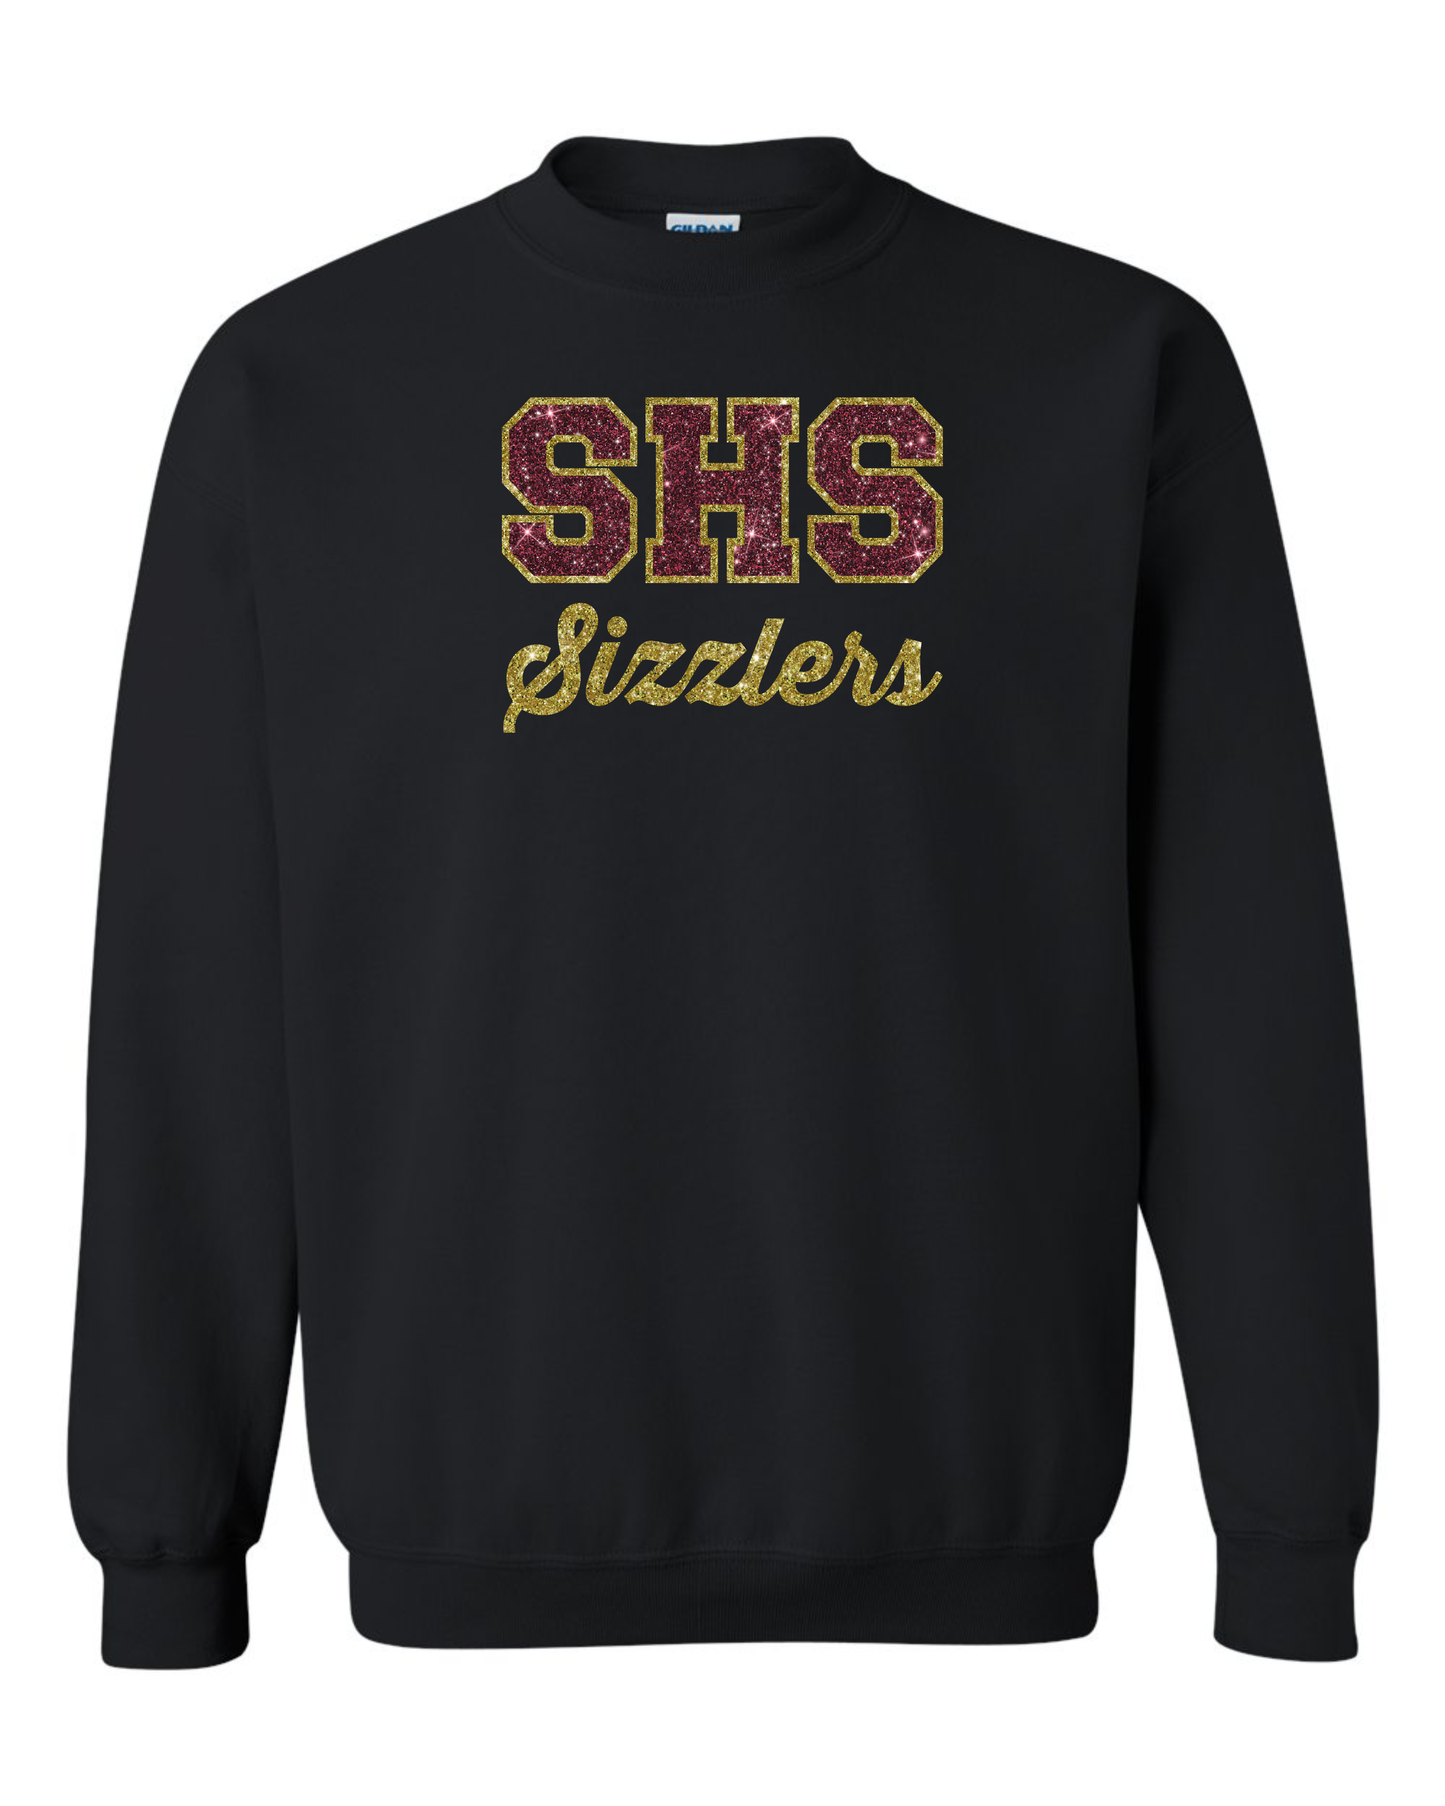 SHS Poms "Athlete" Crewneck Sweatshirt